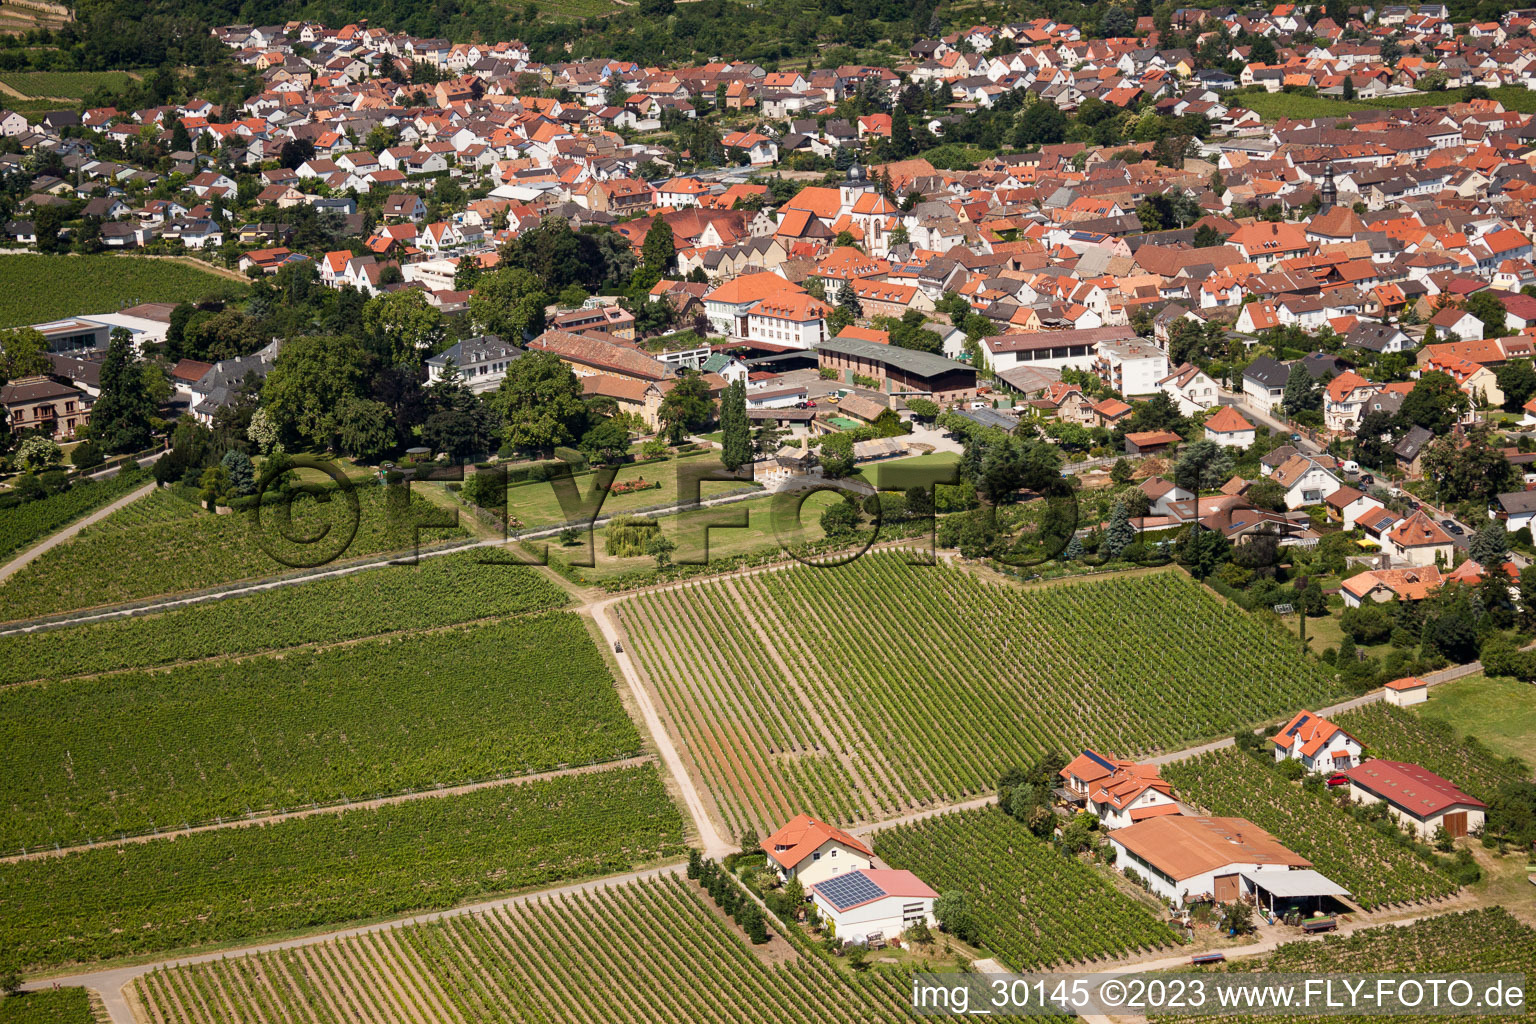 Drone image of Wachenheim an der Weinstraße in the state Rhineland-Palatinate, Germany